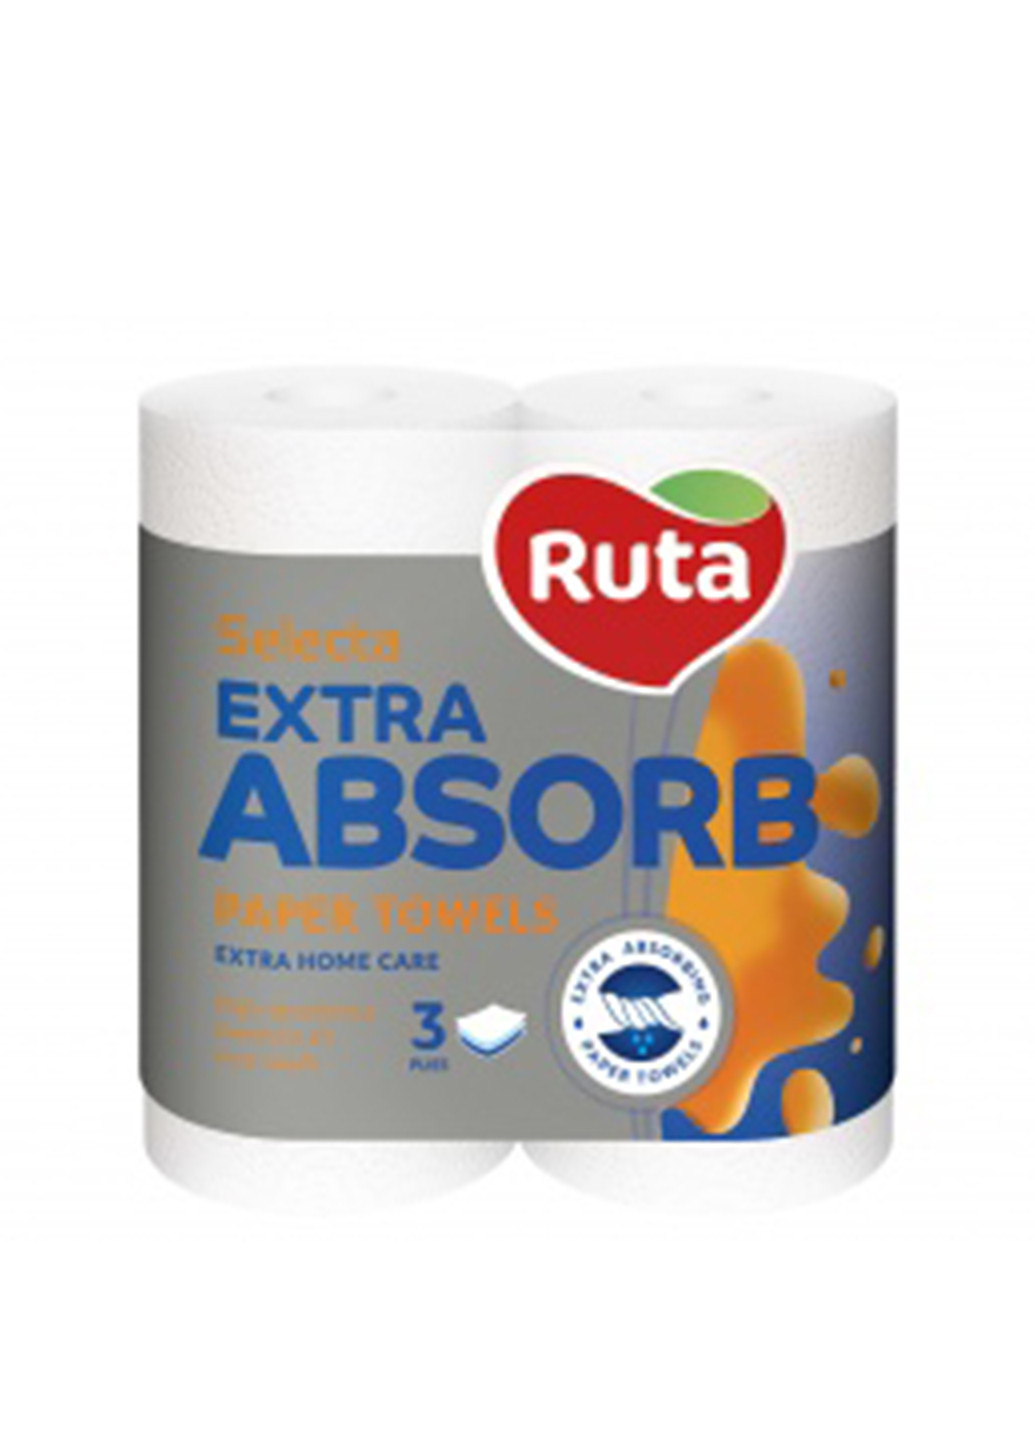 Бумажные полотенца Extra Absorb (2 рулона) Ruta (151347069)